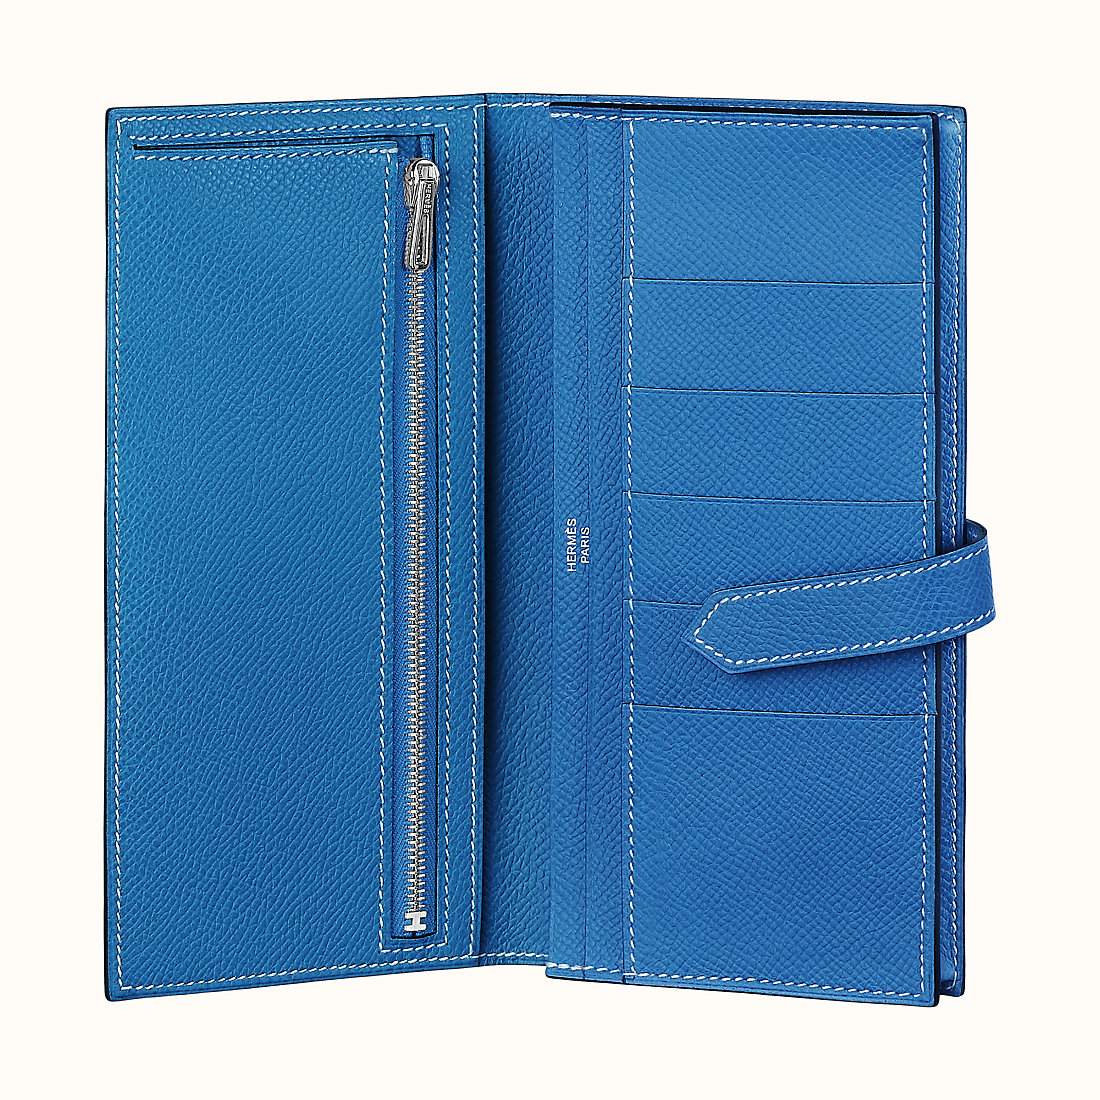 臺灣基隆市 Hermes Bearn wallet Epsom CKI7 Bleu Zellige 琉璃藍